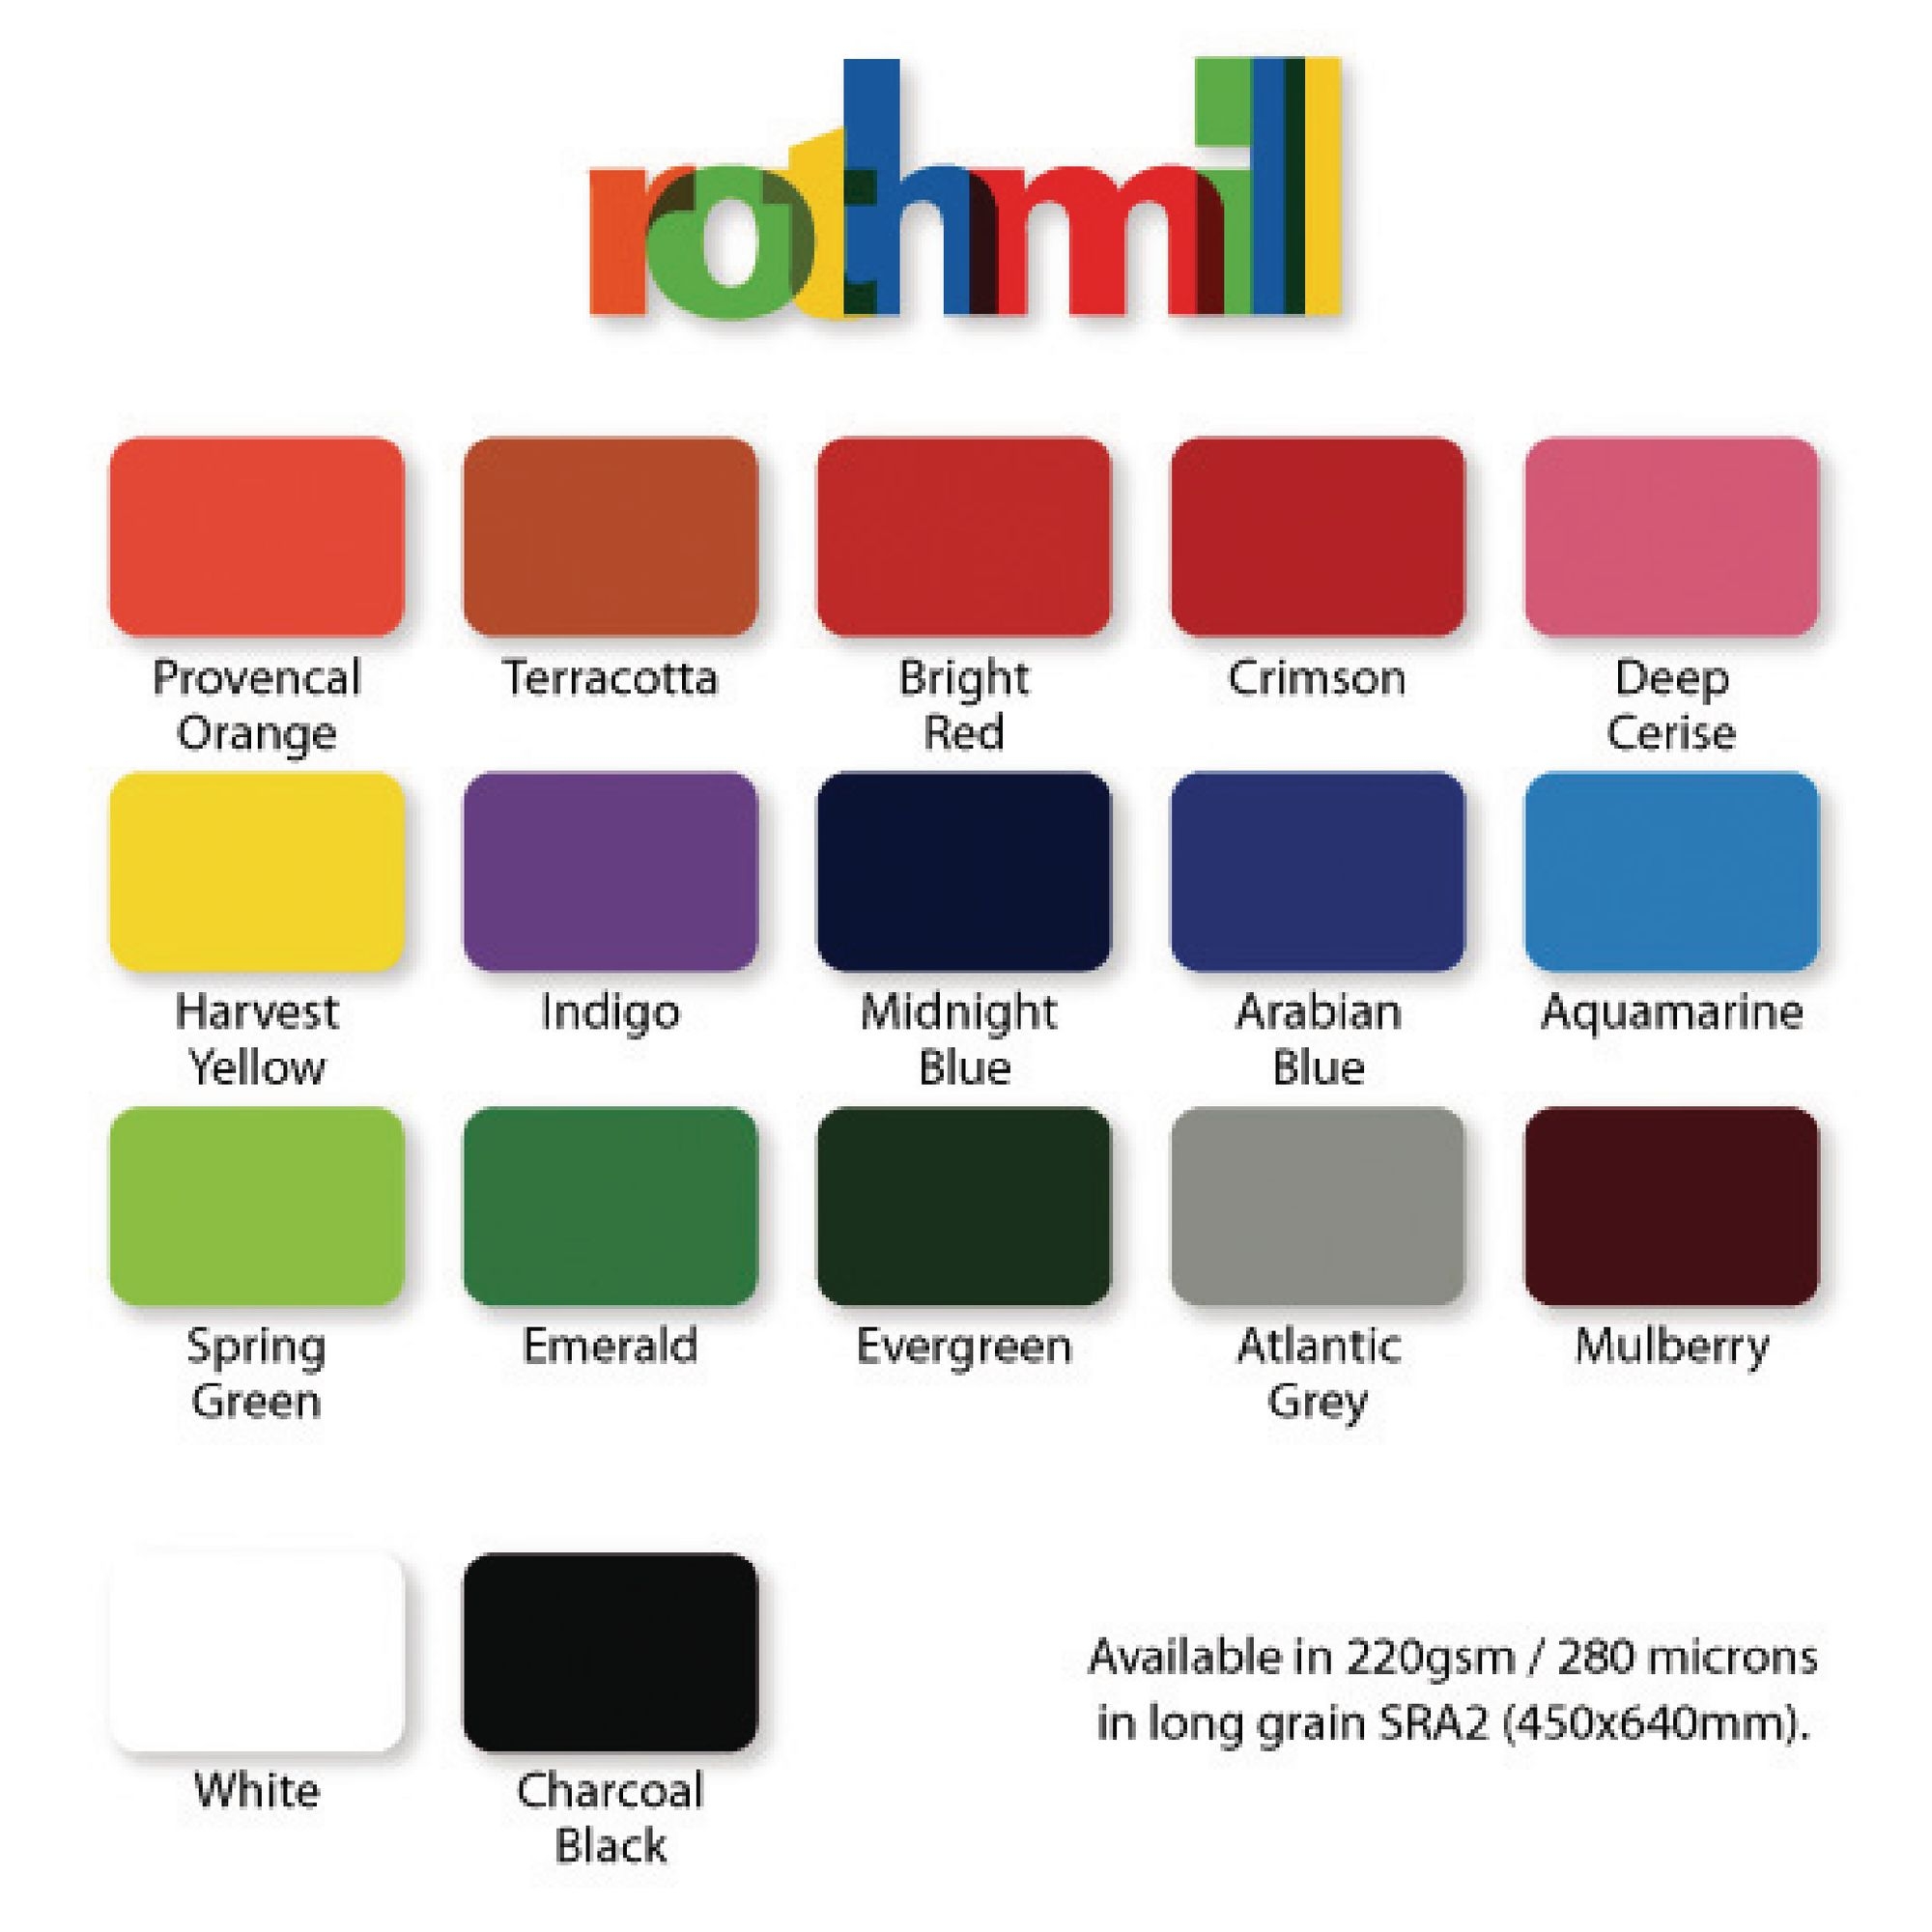 Rothmill A4 Brilliant Colour Card - Provencal orange